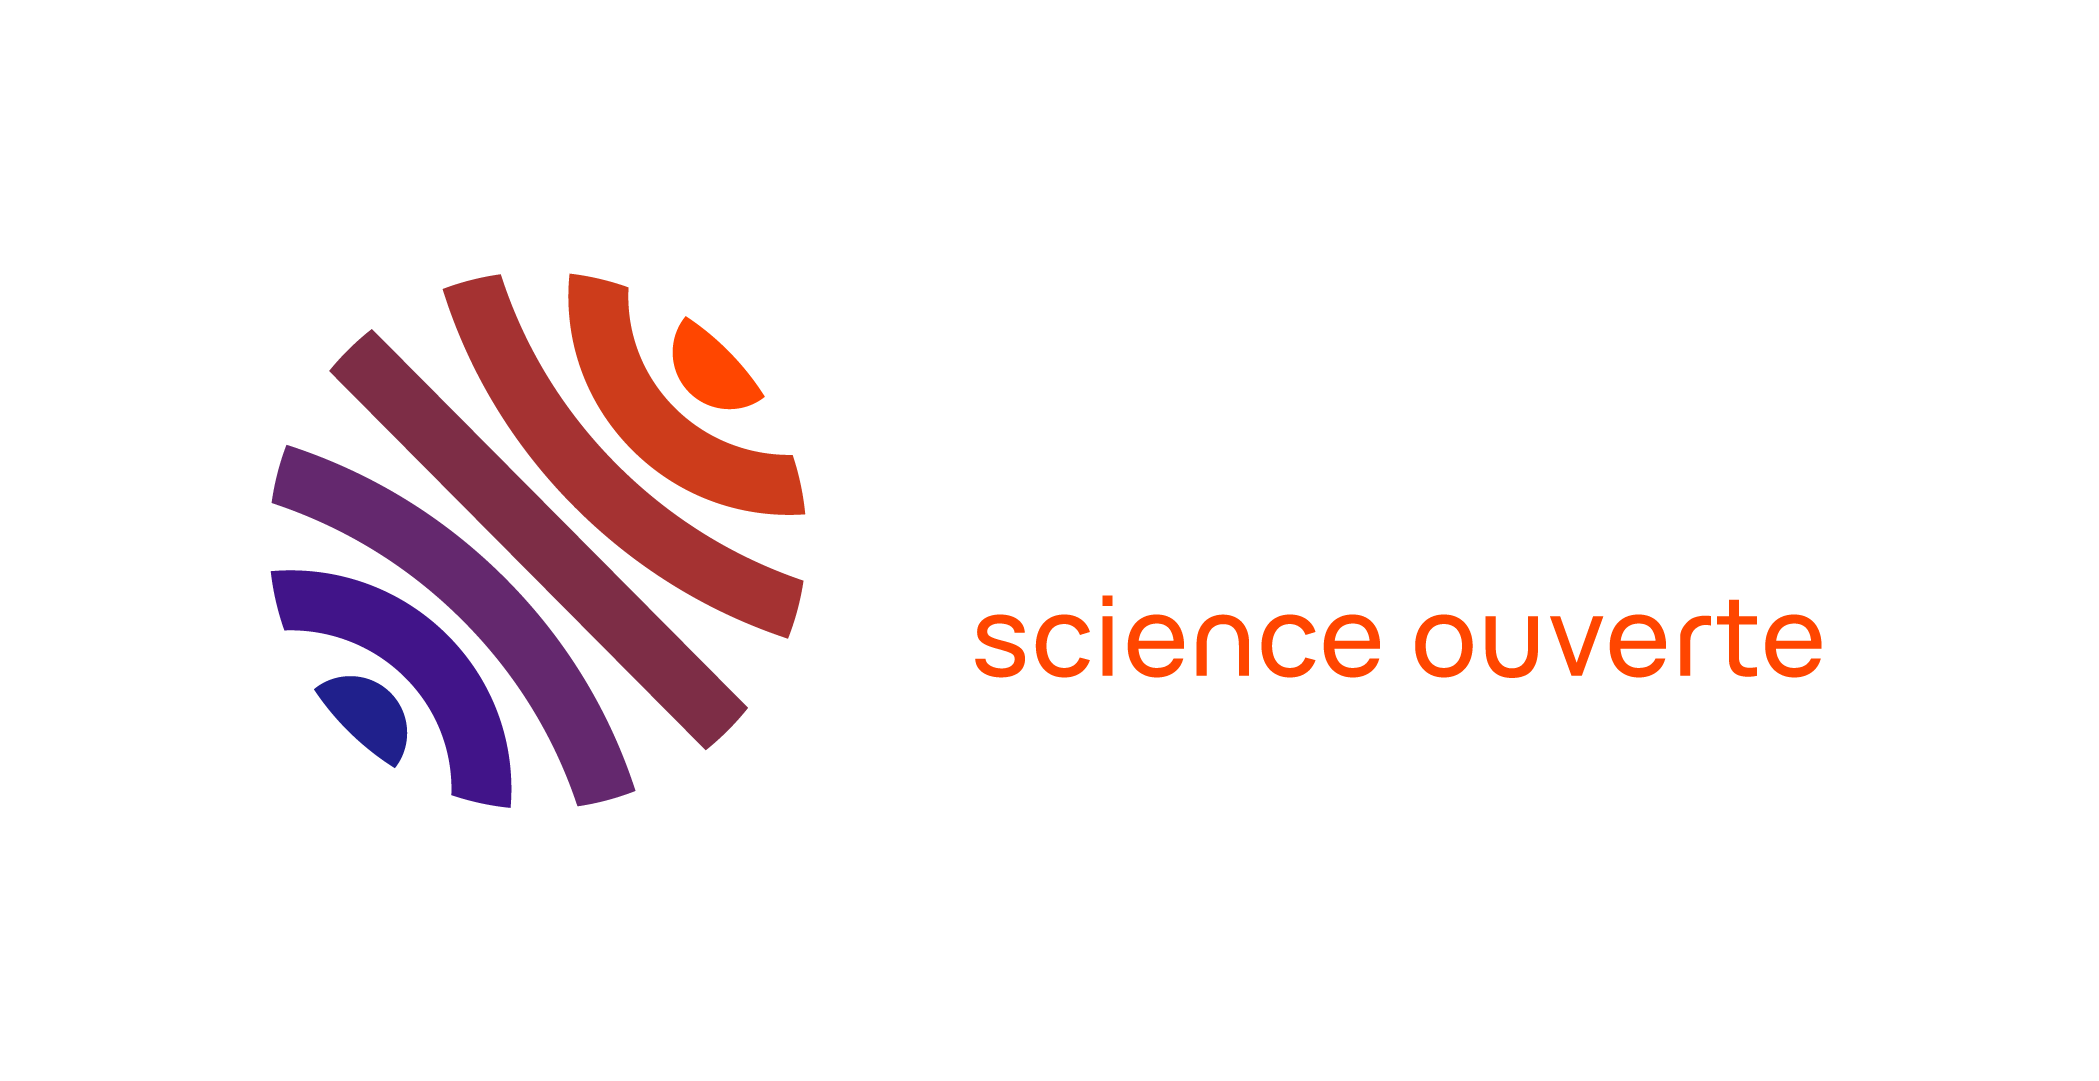 HAL open science